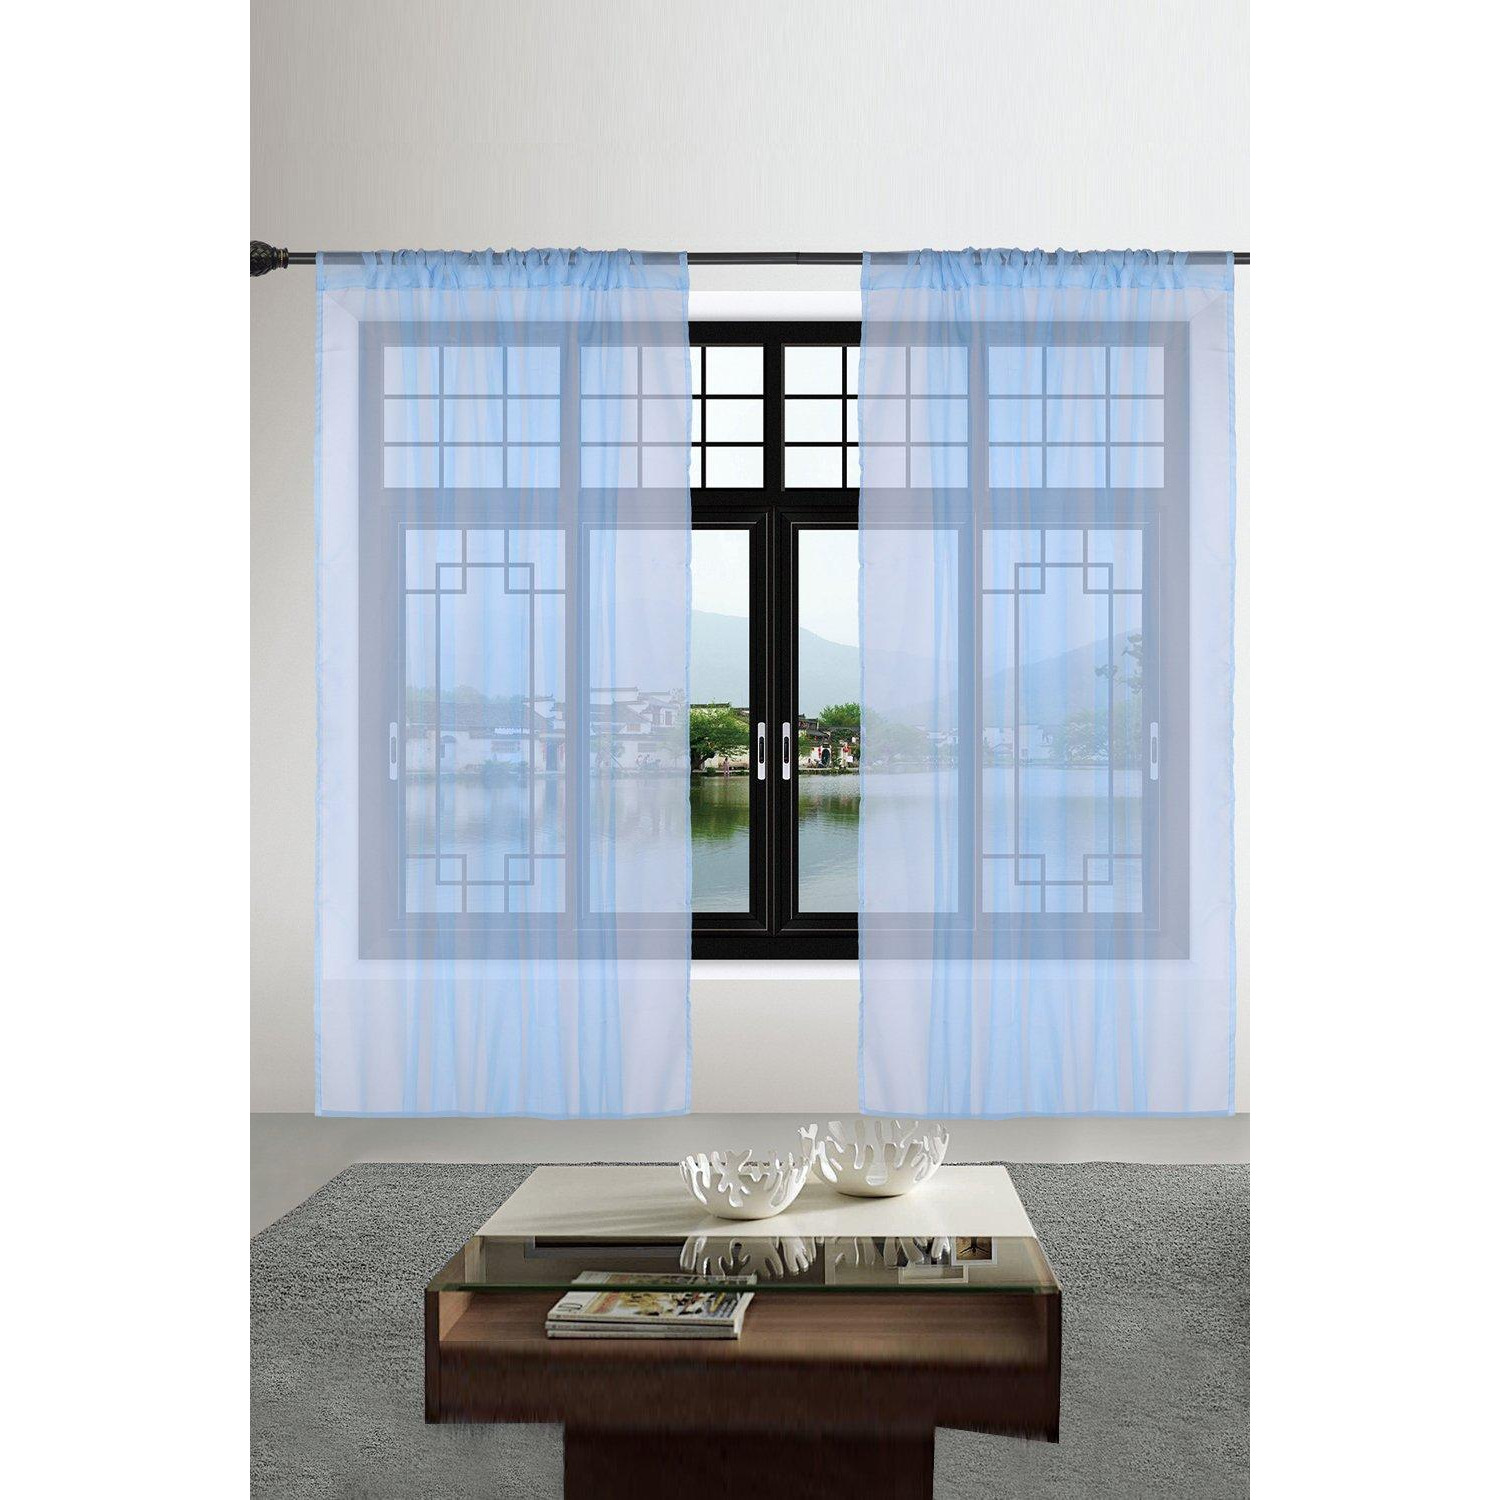 Pair Of Semi Transparent Chiffon Voile Curtains - image 1